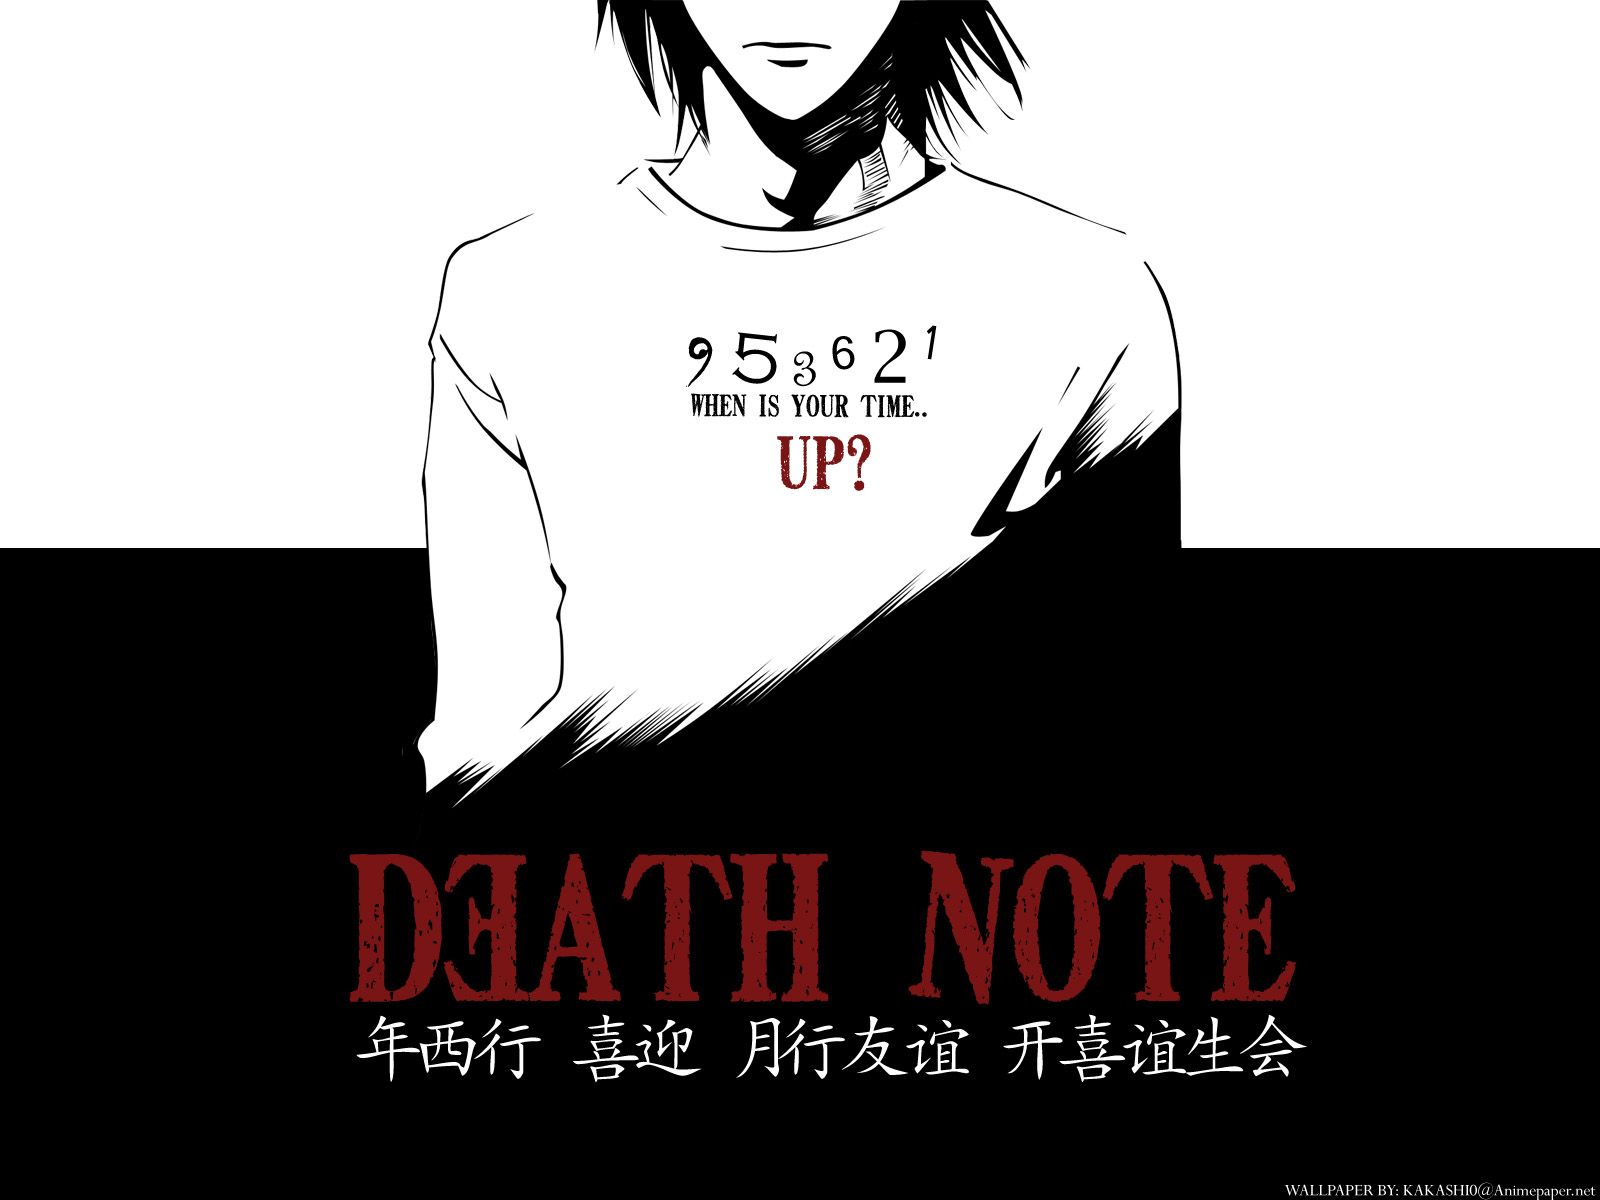 Death Note 壁紙画像 Pchdwallpaper Com Pchdwallpaper Com